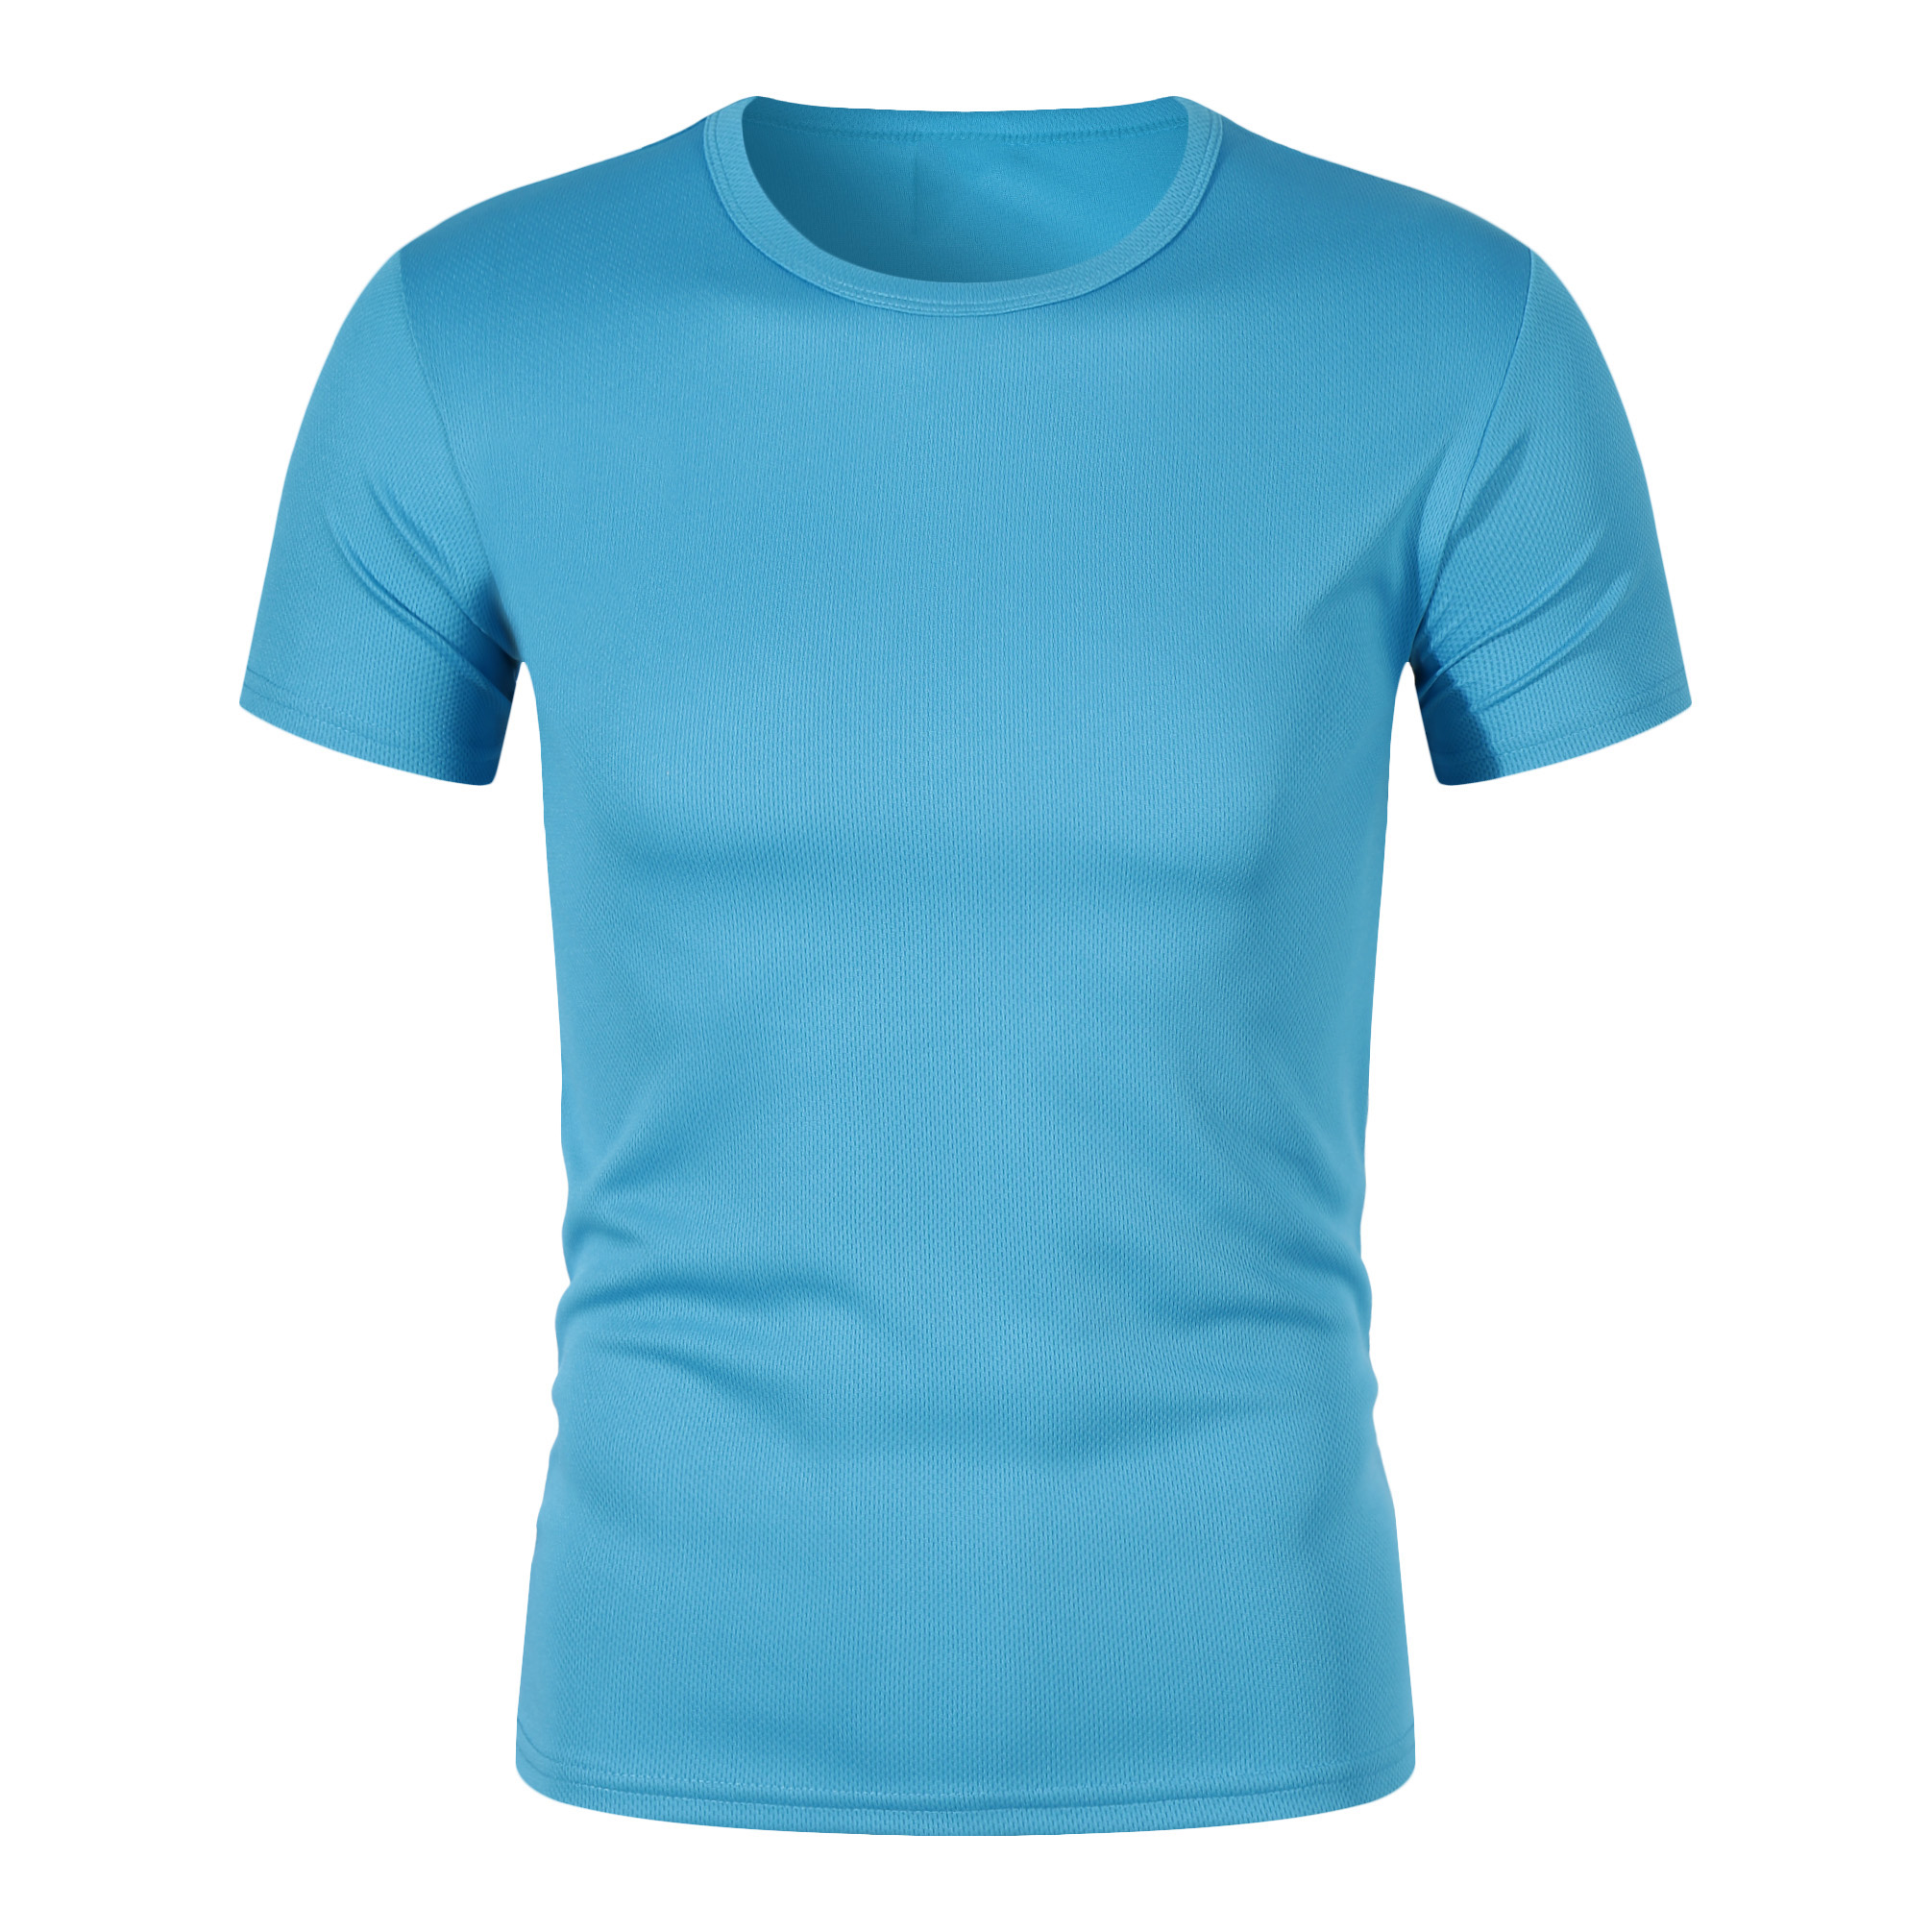 Hot Selling for Disneyland Sweatshirt - Plain sports dry fit breathable comfortable polyester bird eye fabric men t shirt – Gift